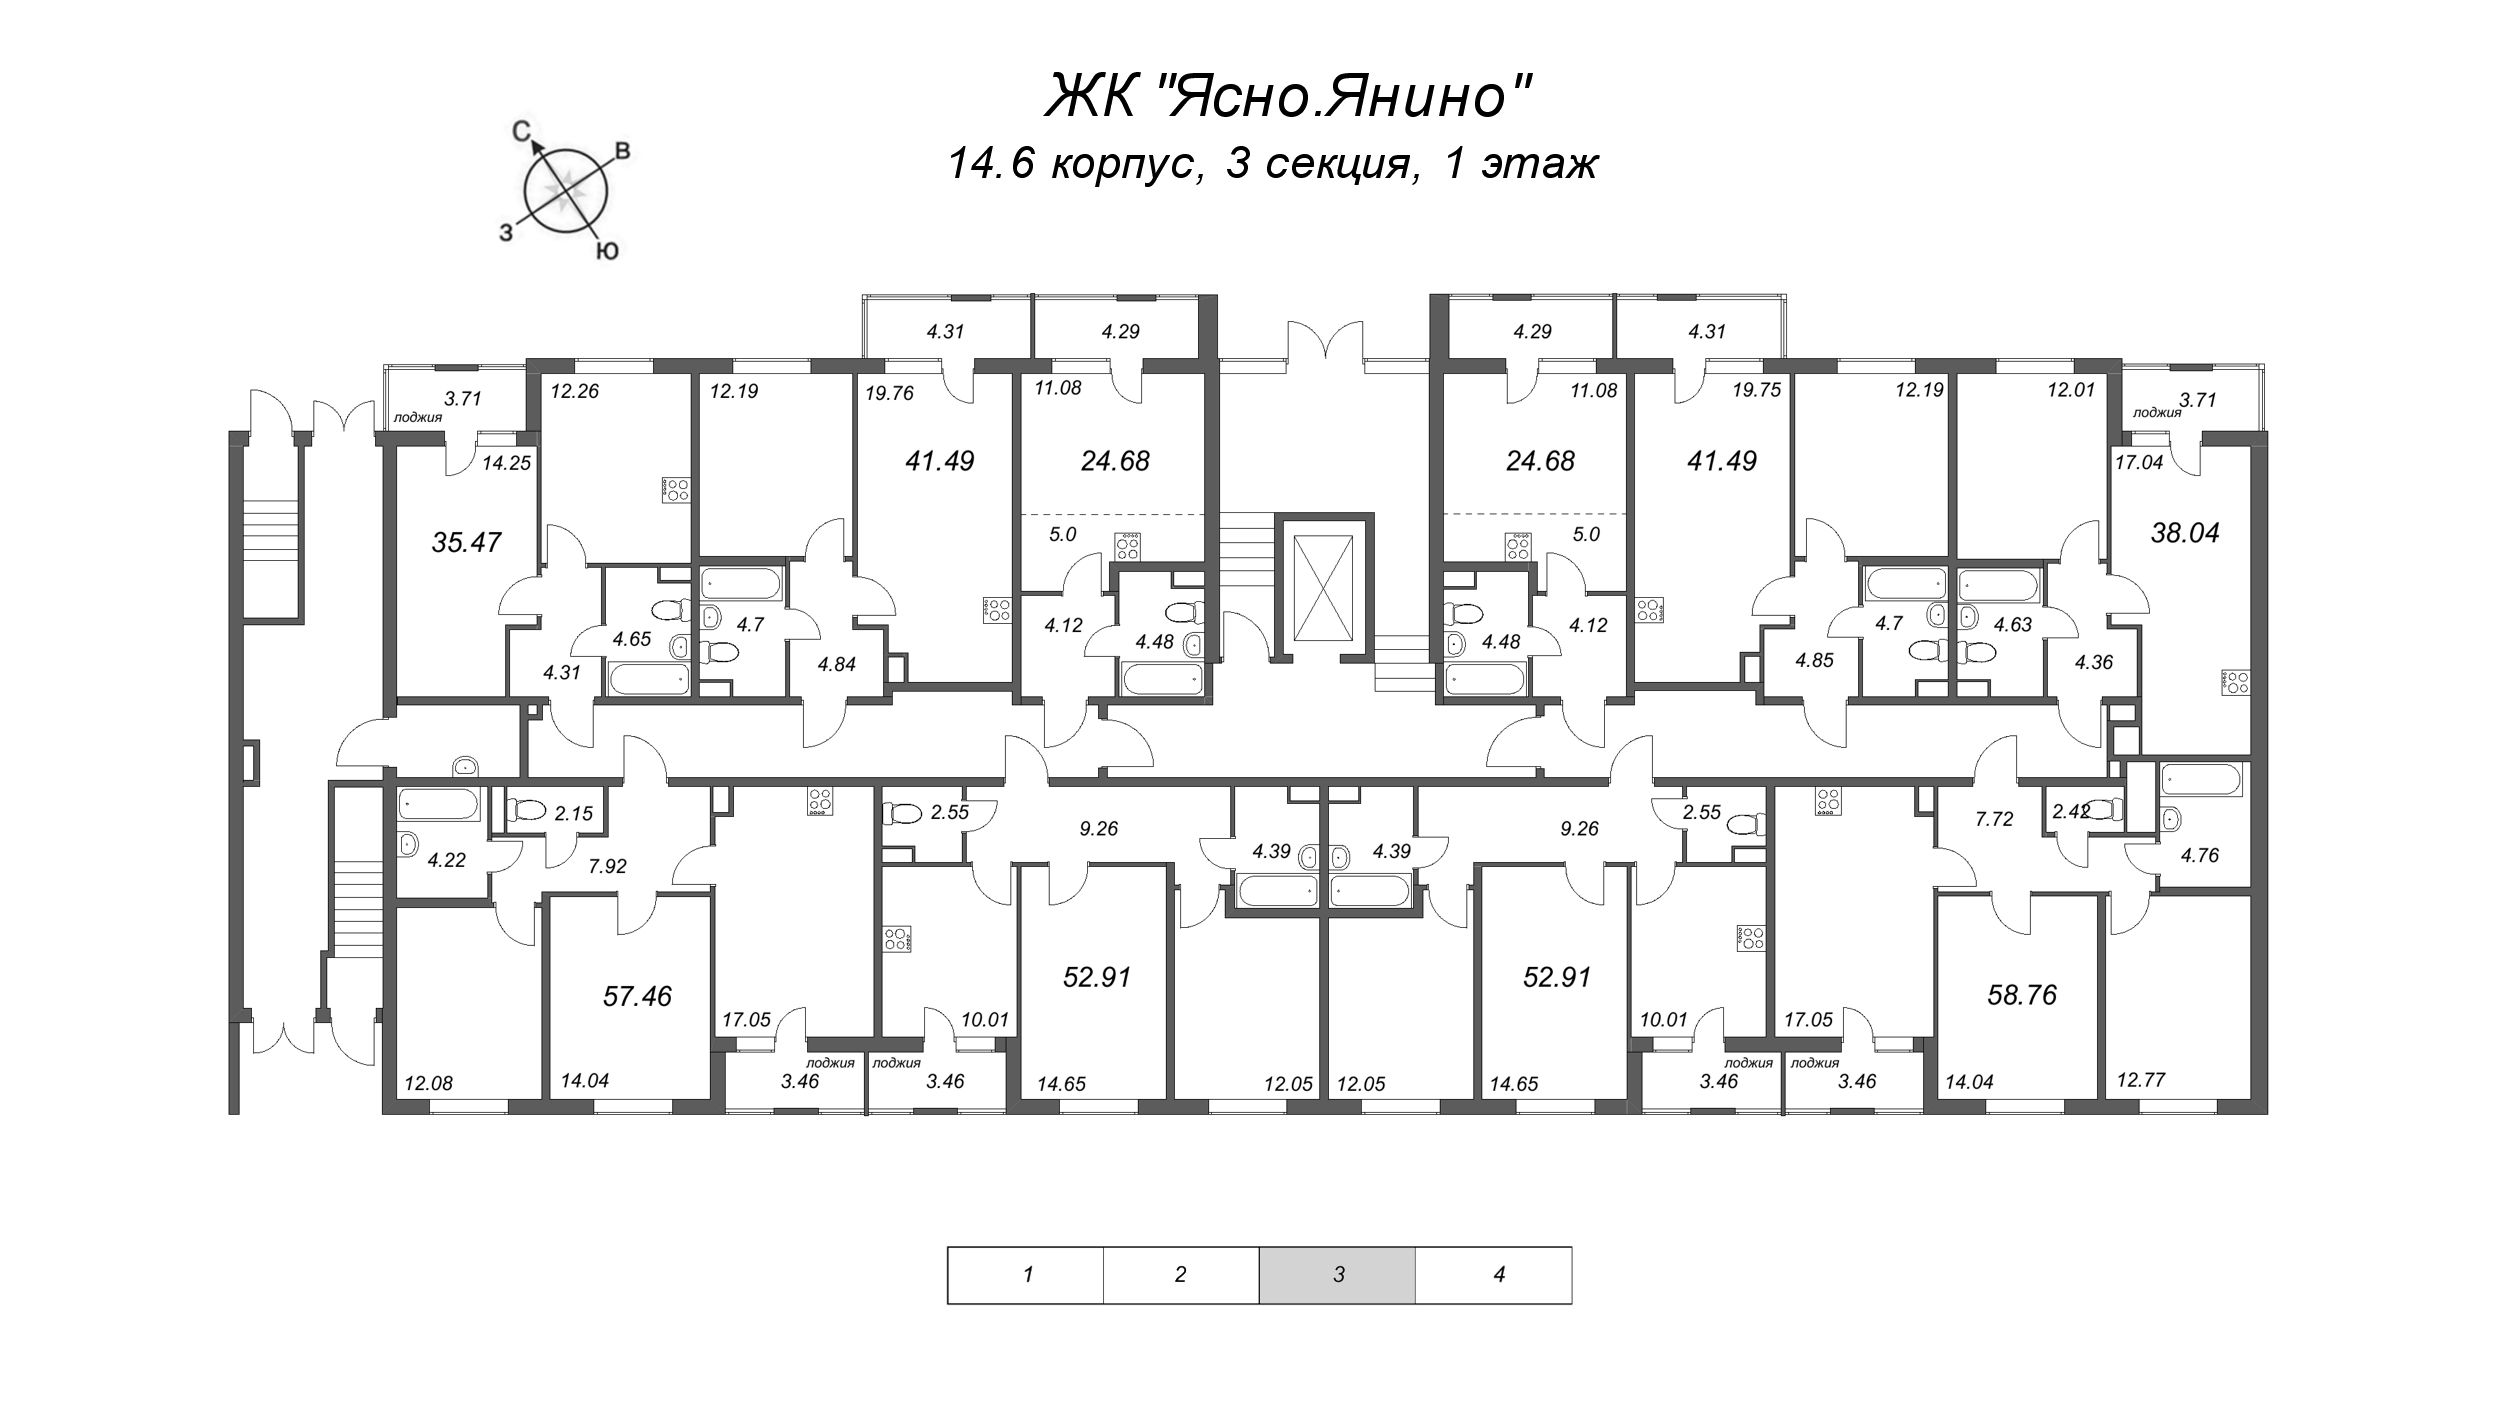 3-комнатная (Евро) квартира, 57.46 м² - планировка этажа